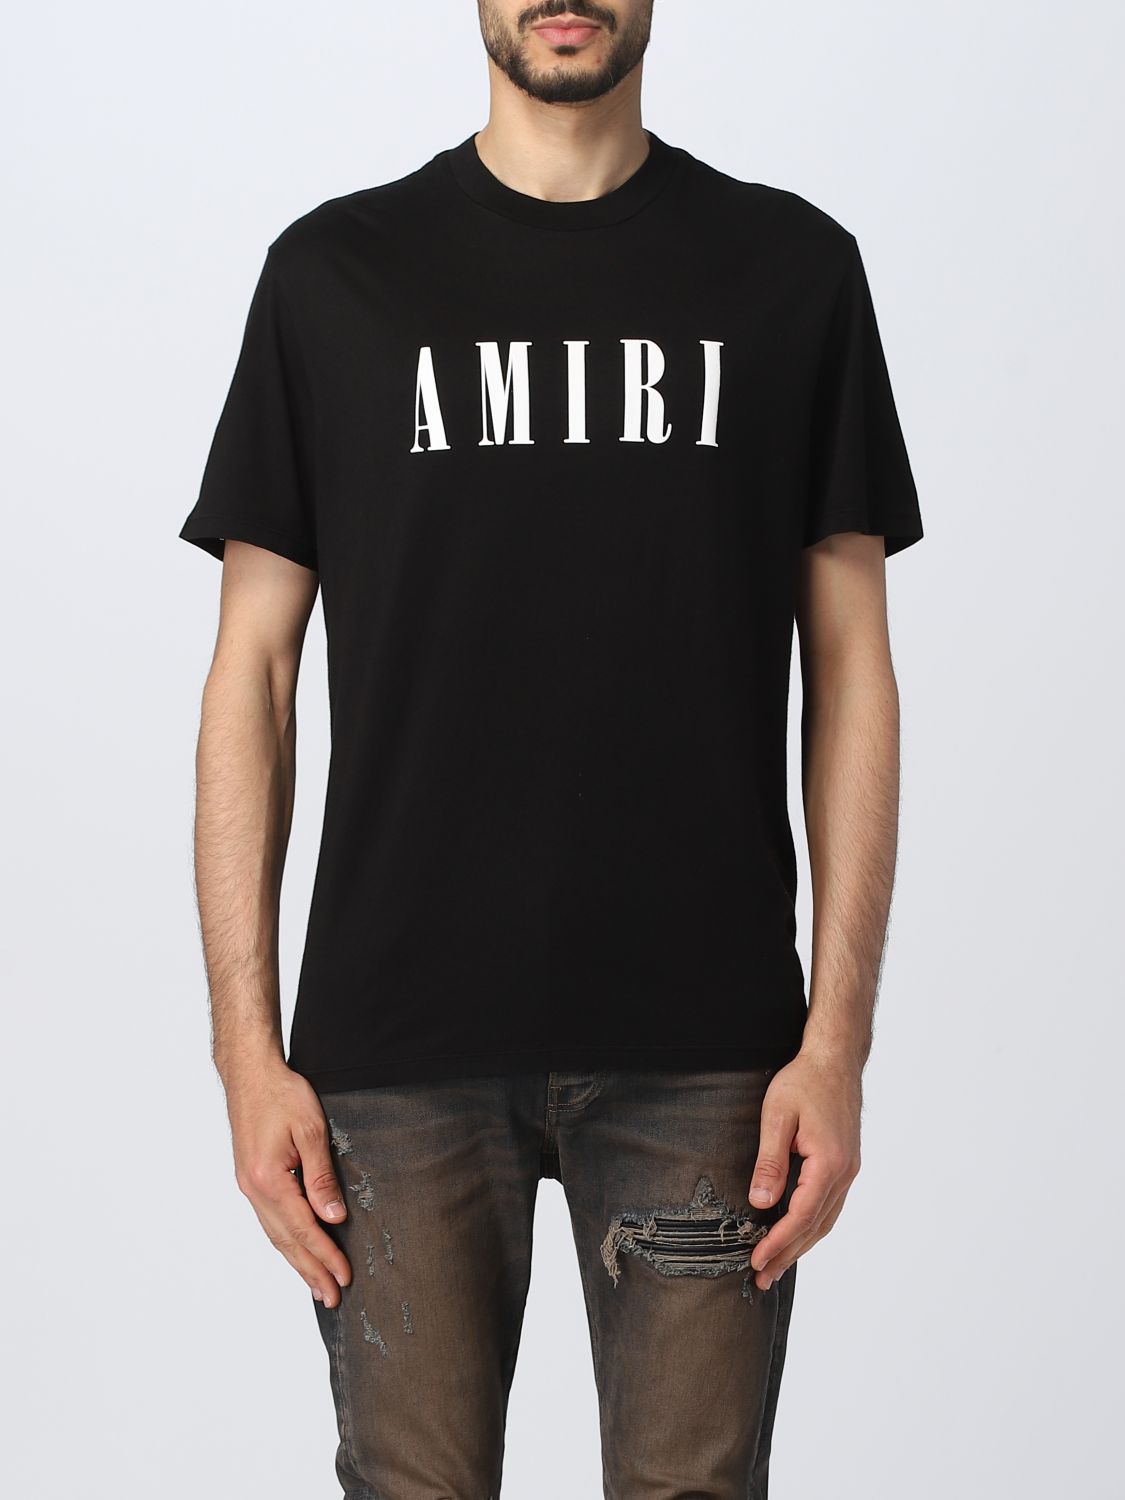 Amiri t-shirt for man